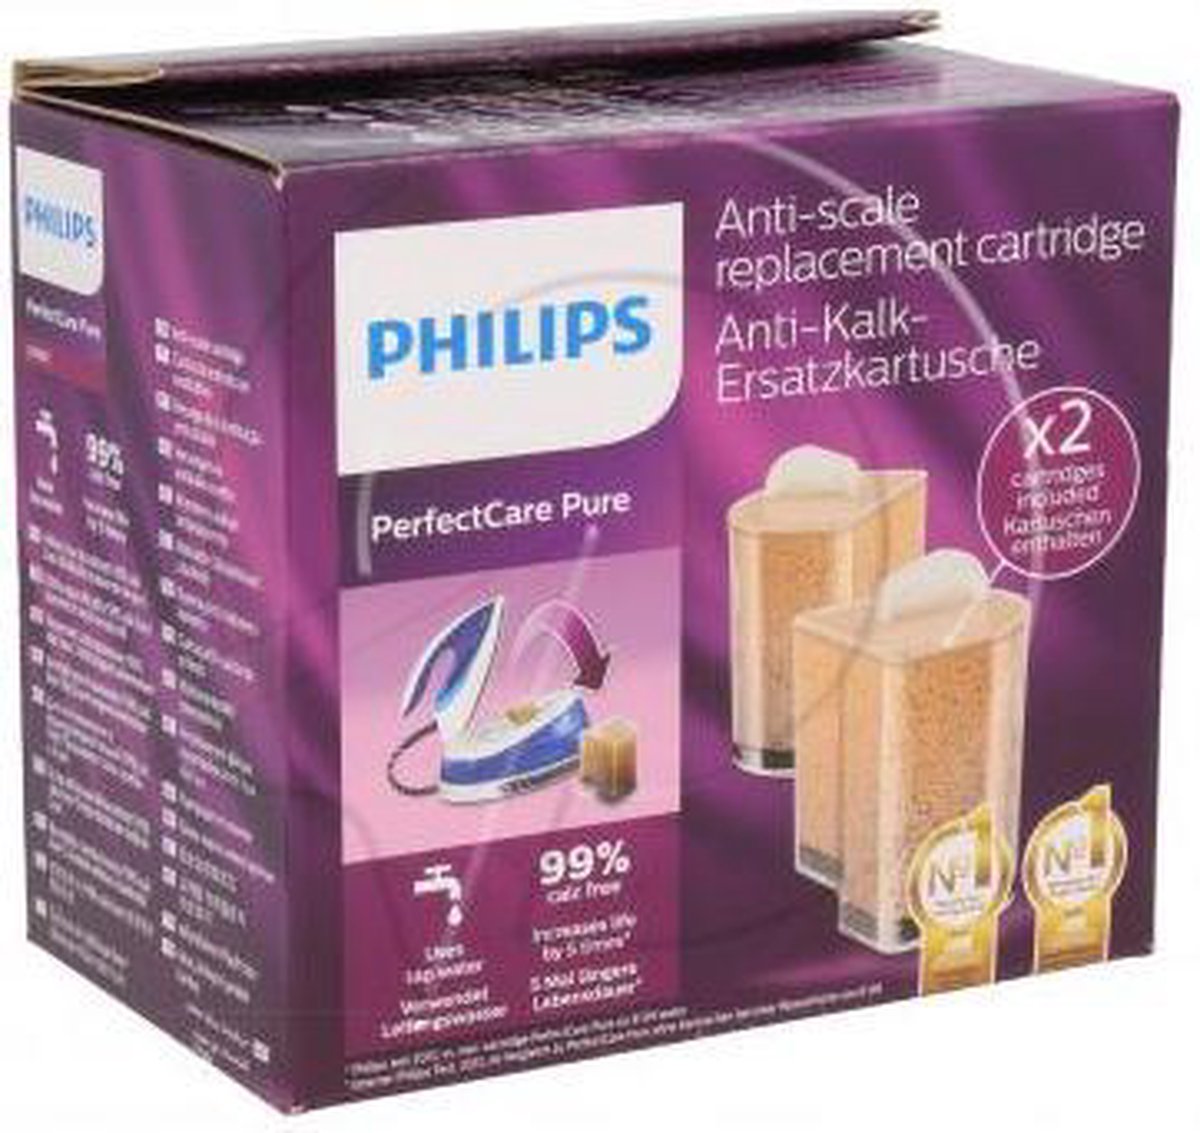 Philips originele antikalk cassette PERFECTCARE PURE PER 2 STUKS strijkijzer  Philips... | bol.com